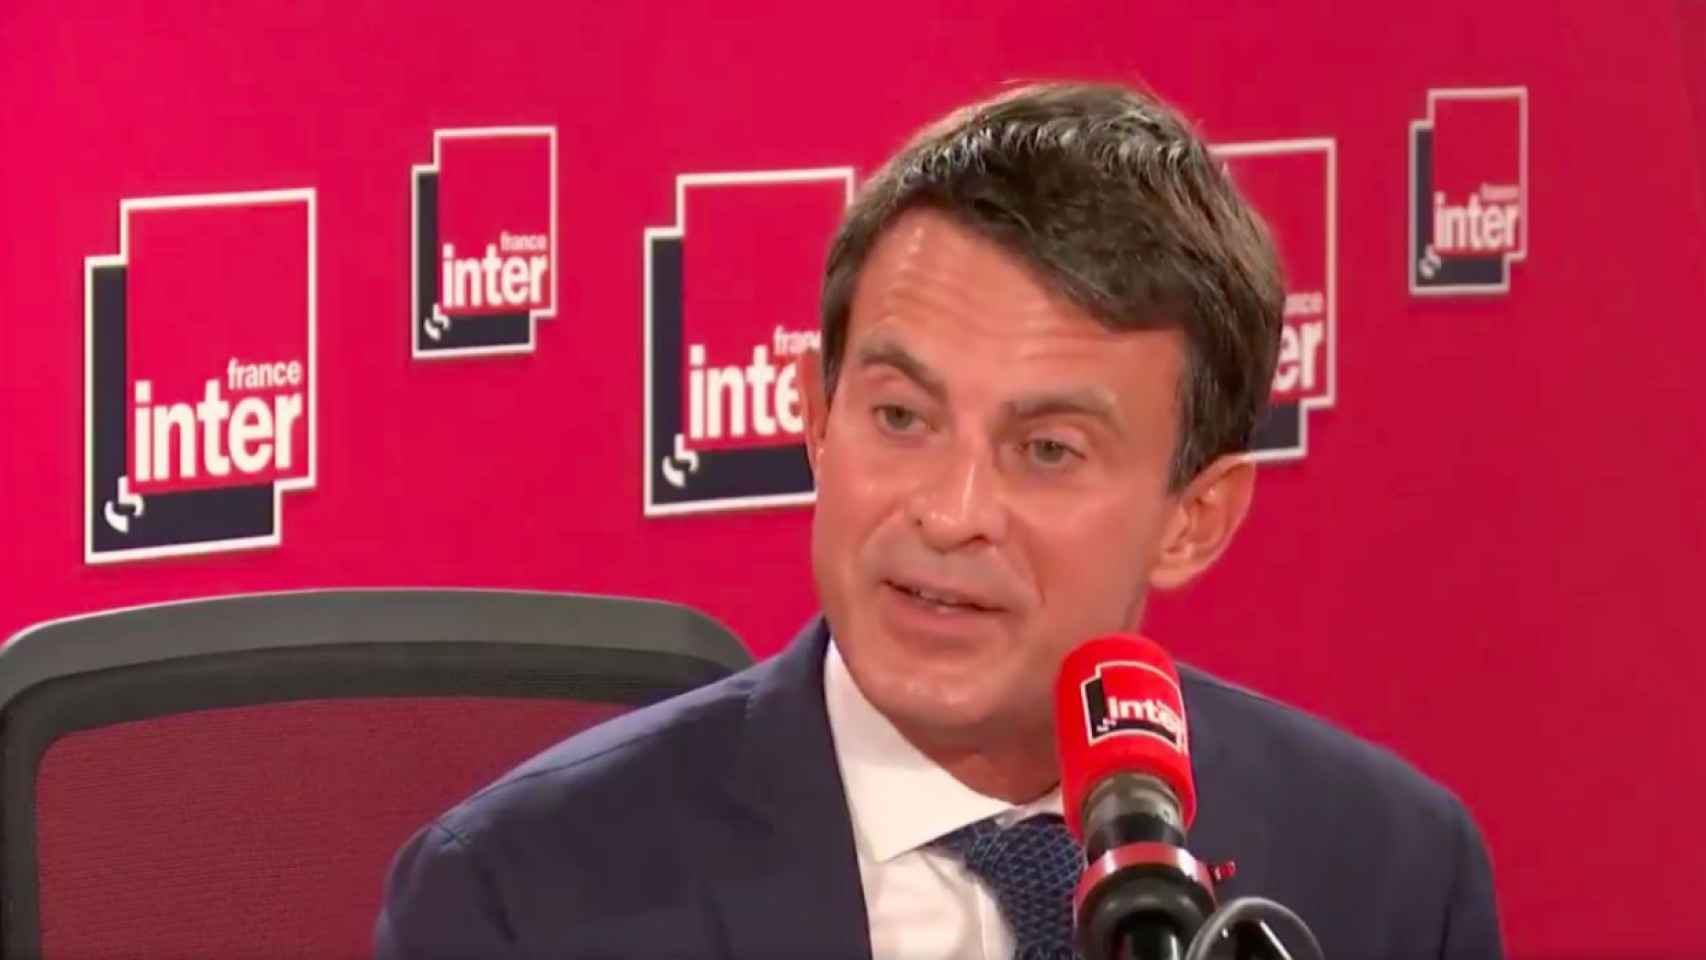 Manuel Valls, en un momento de la entrevista a la emisora de radio France Inter / @franceinter